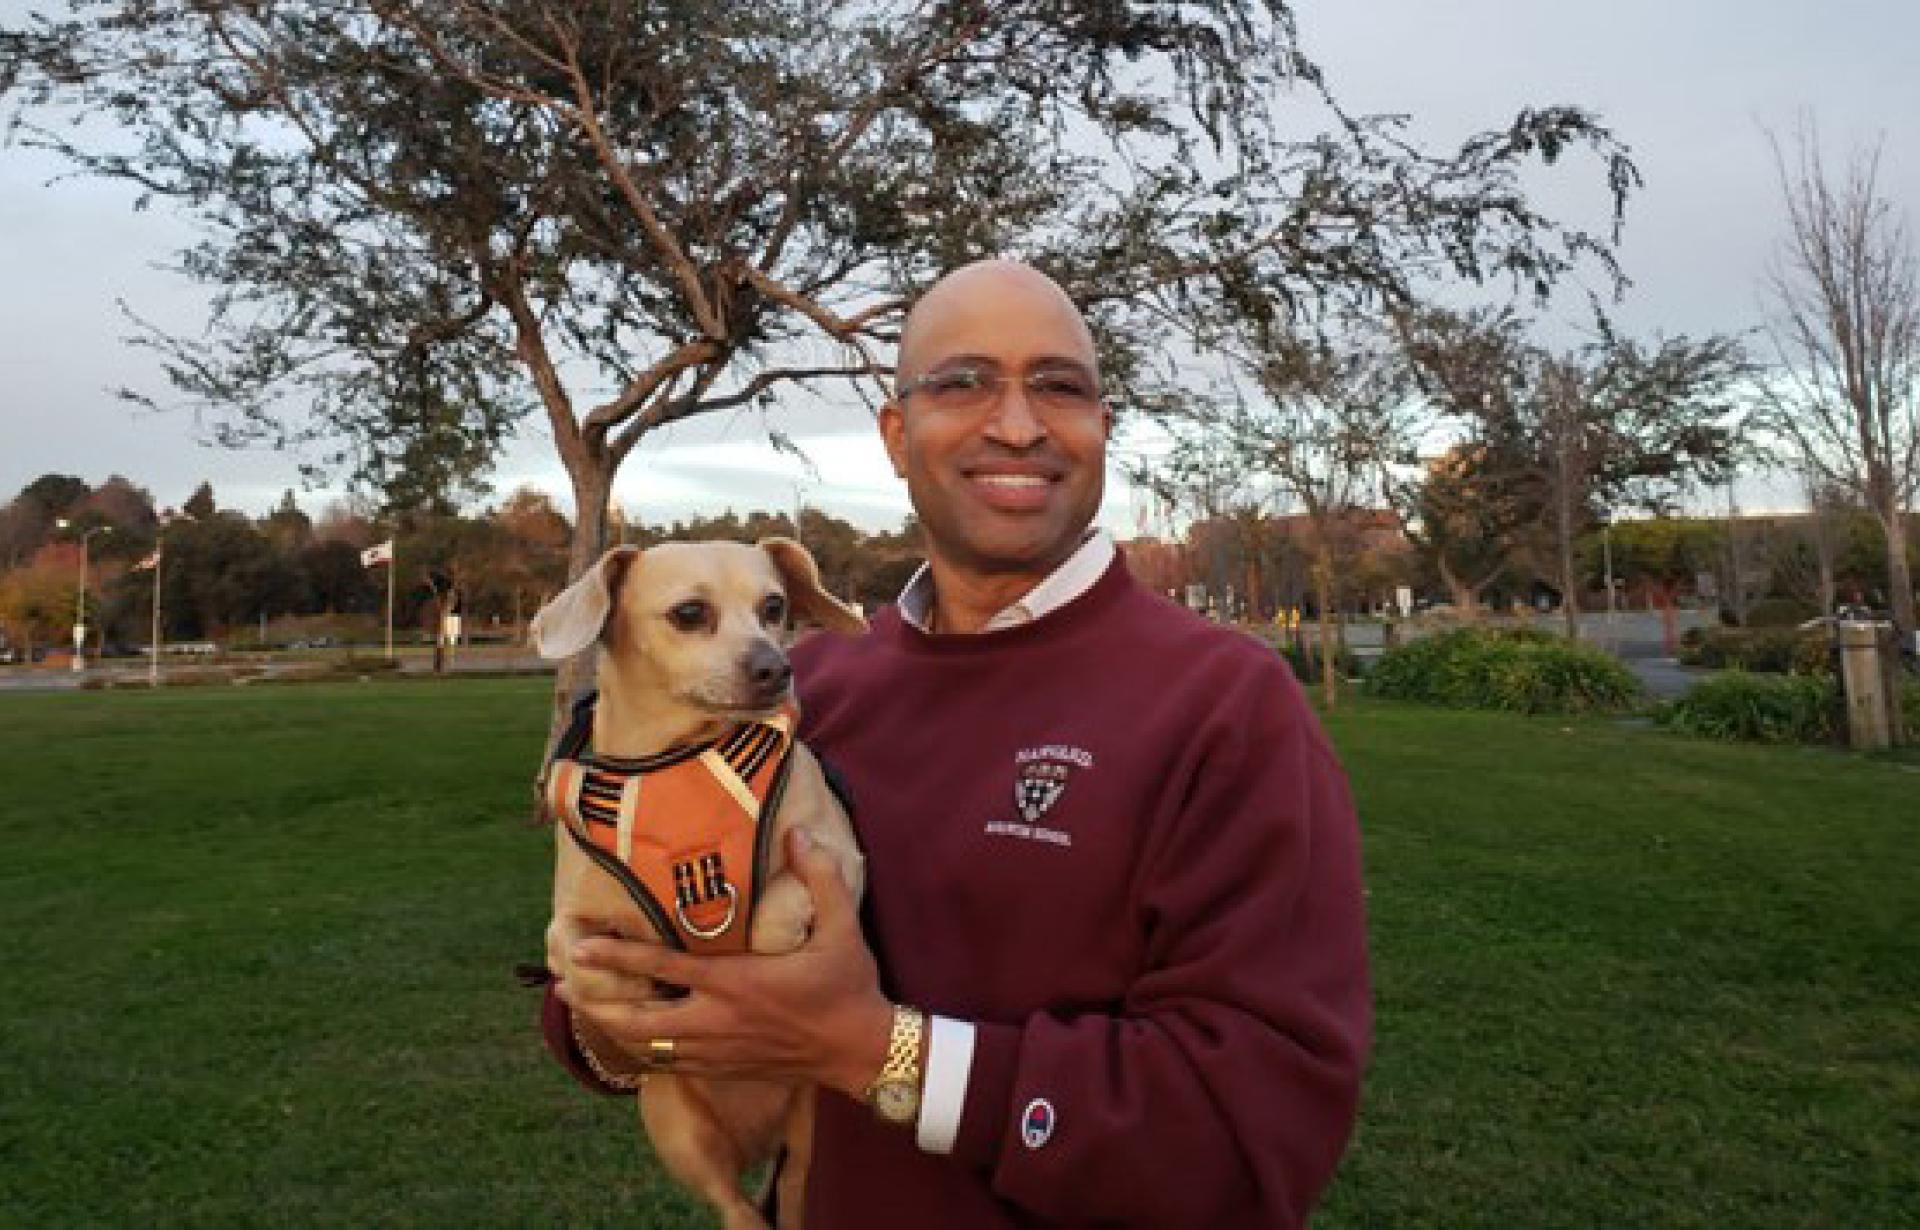 Joe Angelo holding a small brown Chihuahua-type dog